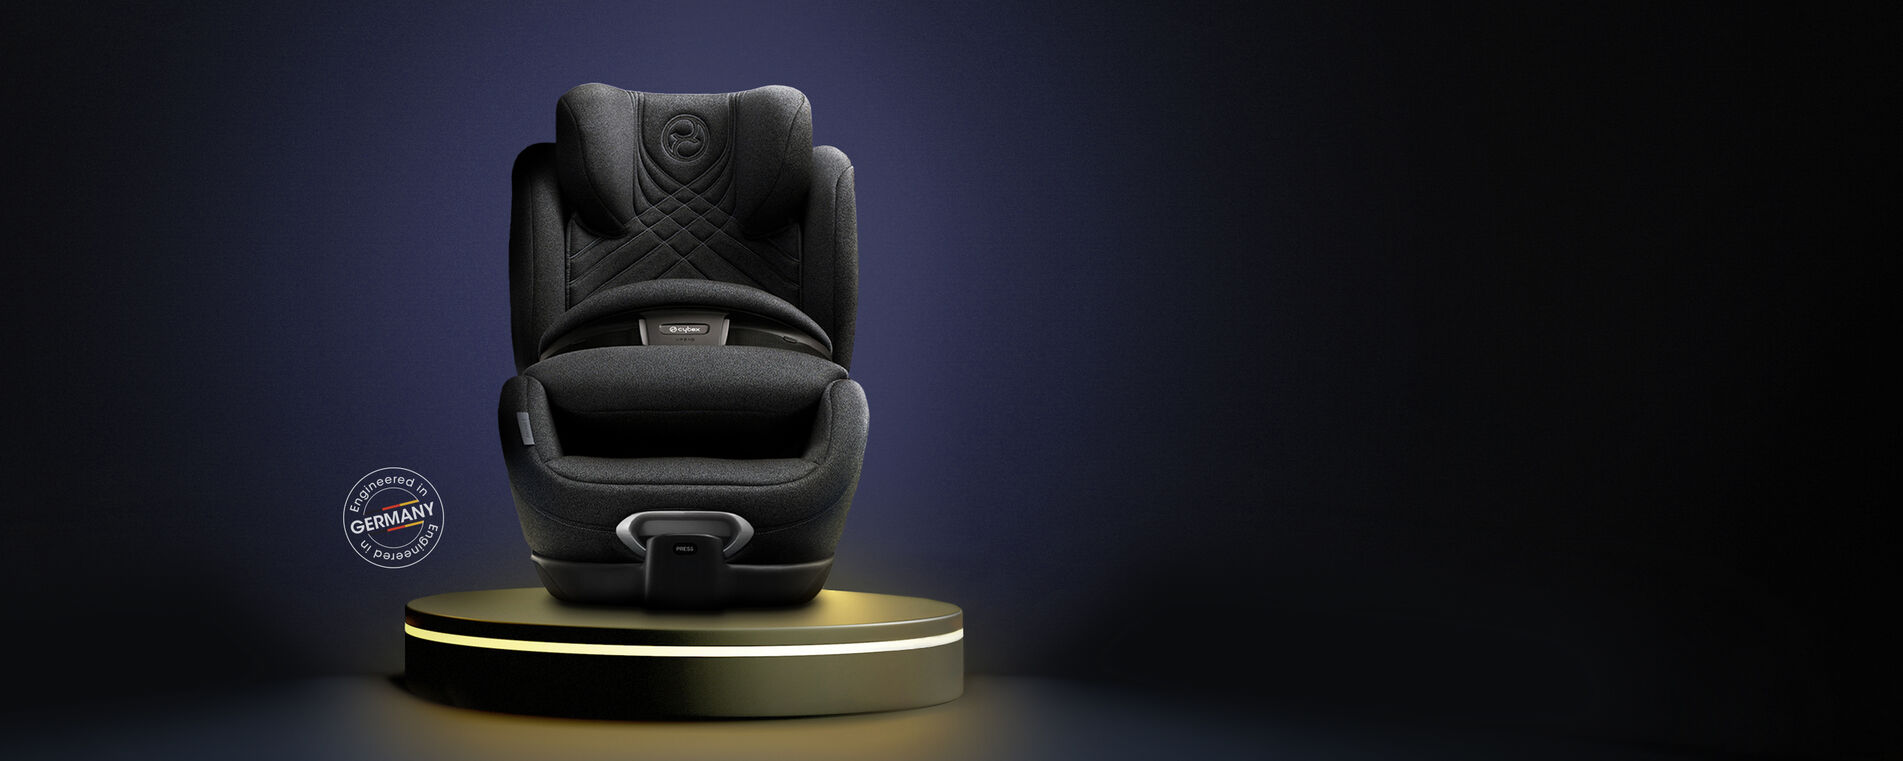 CYBEX Platinum Anoris T i-Size Car Seat Awards